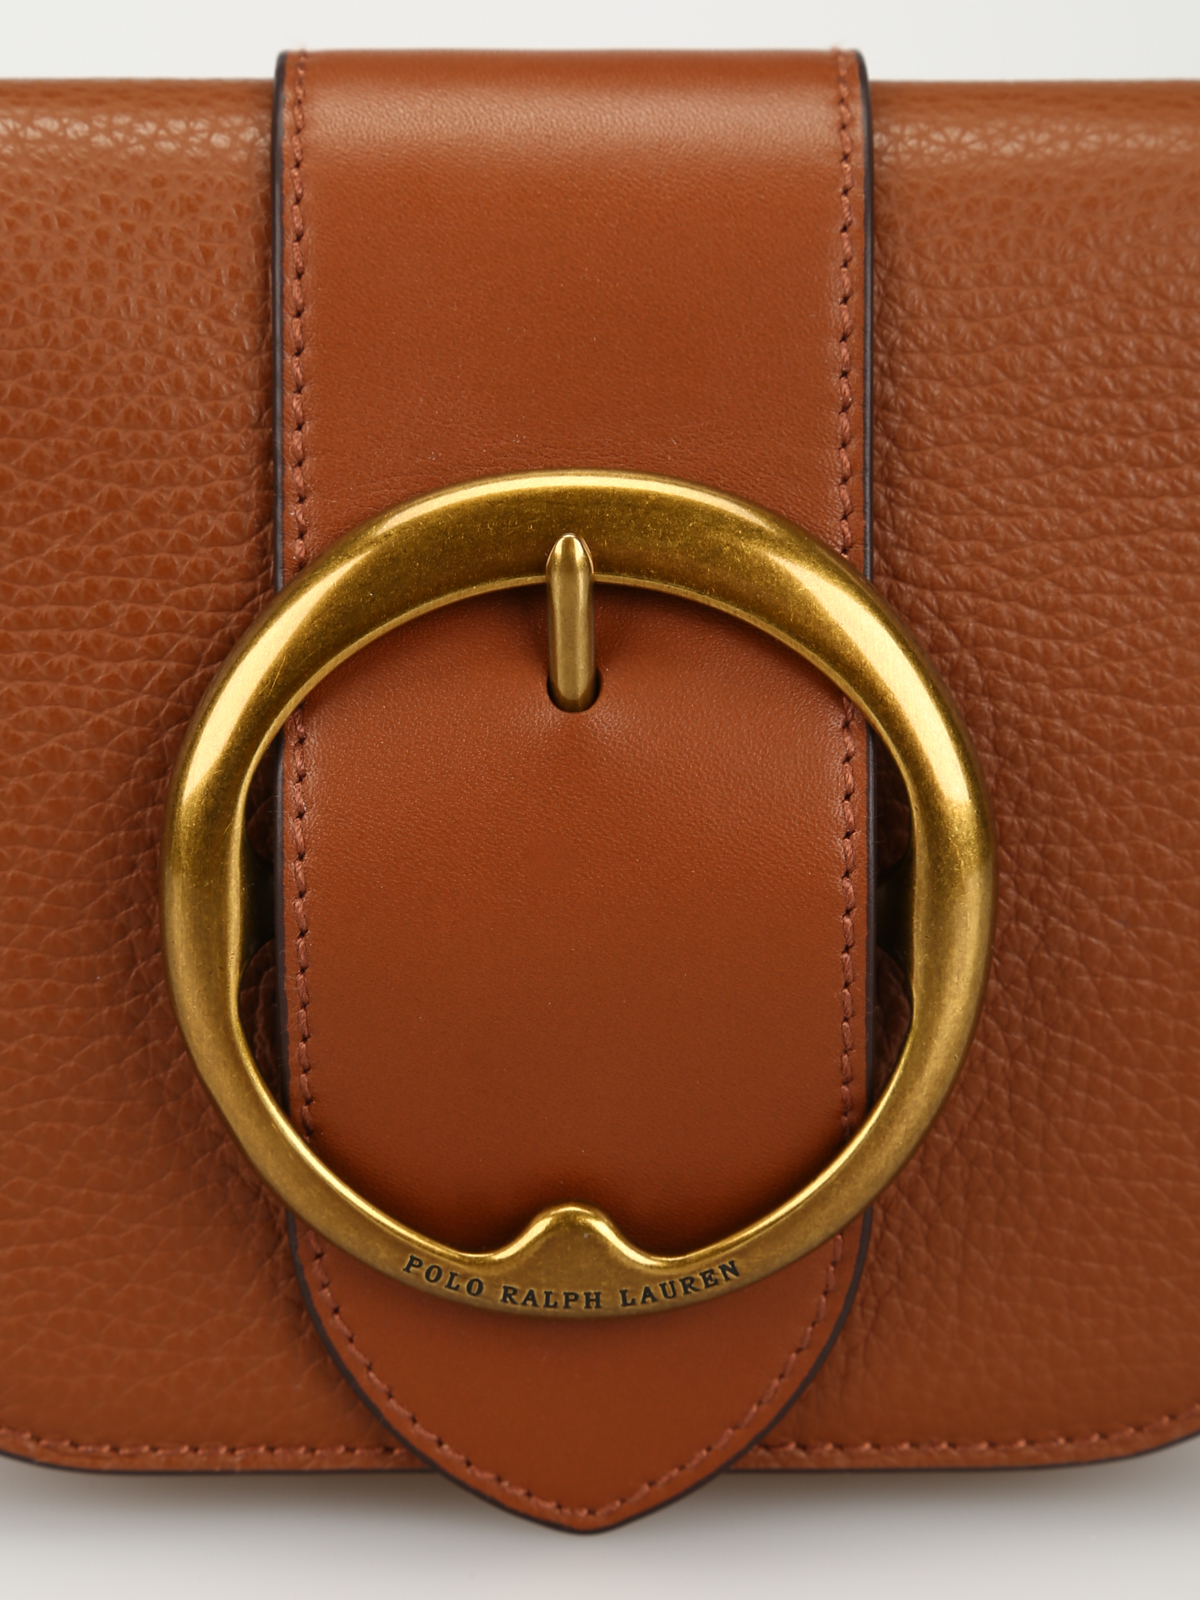 Polo Ralph Lauren - Lennox Mini brown leather shoulder bag - shoulder bags - 428722528002